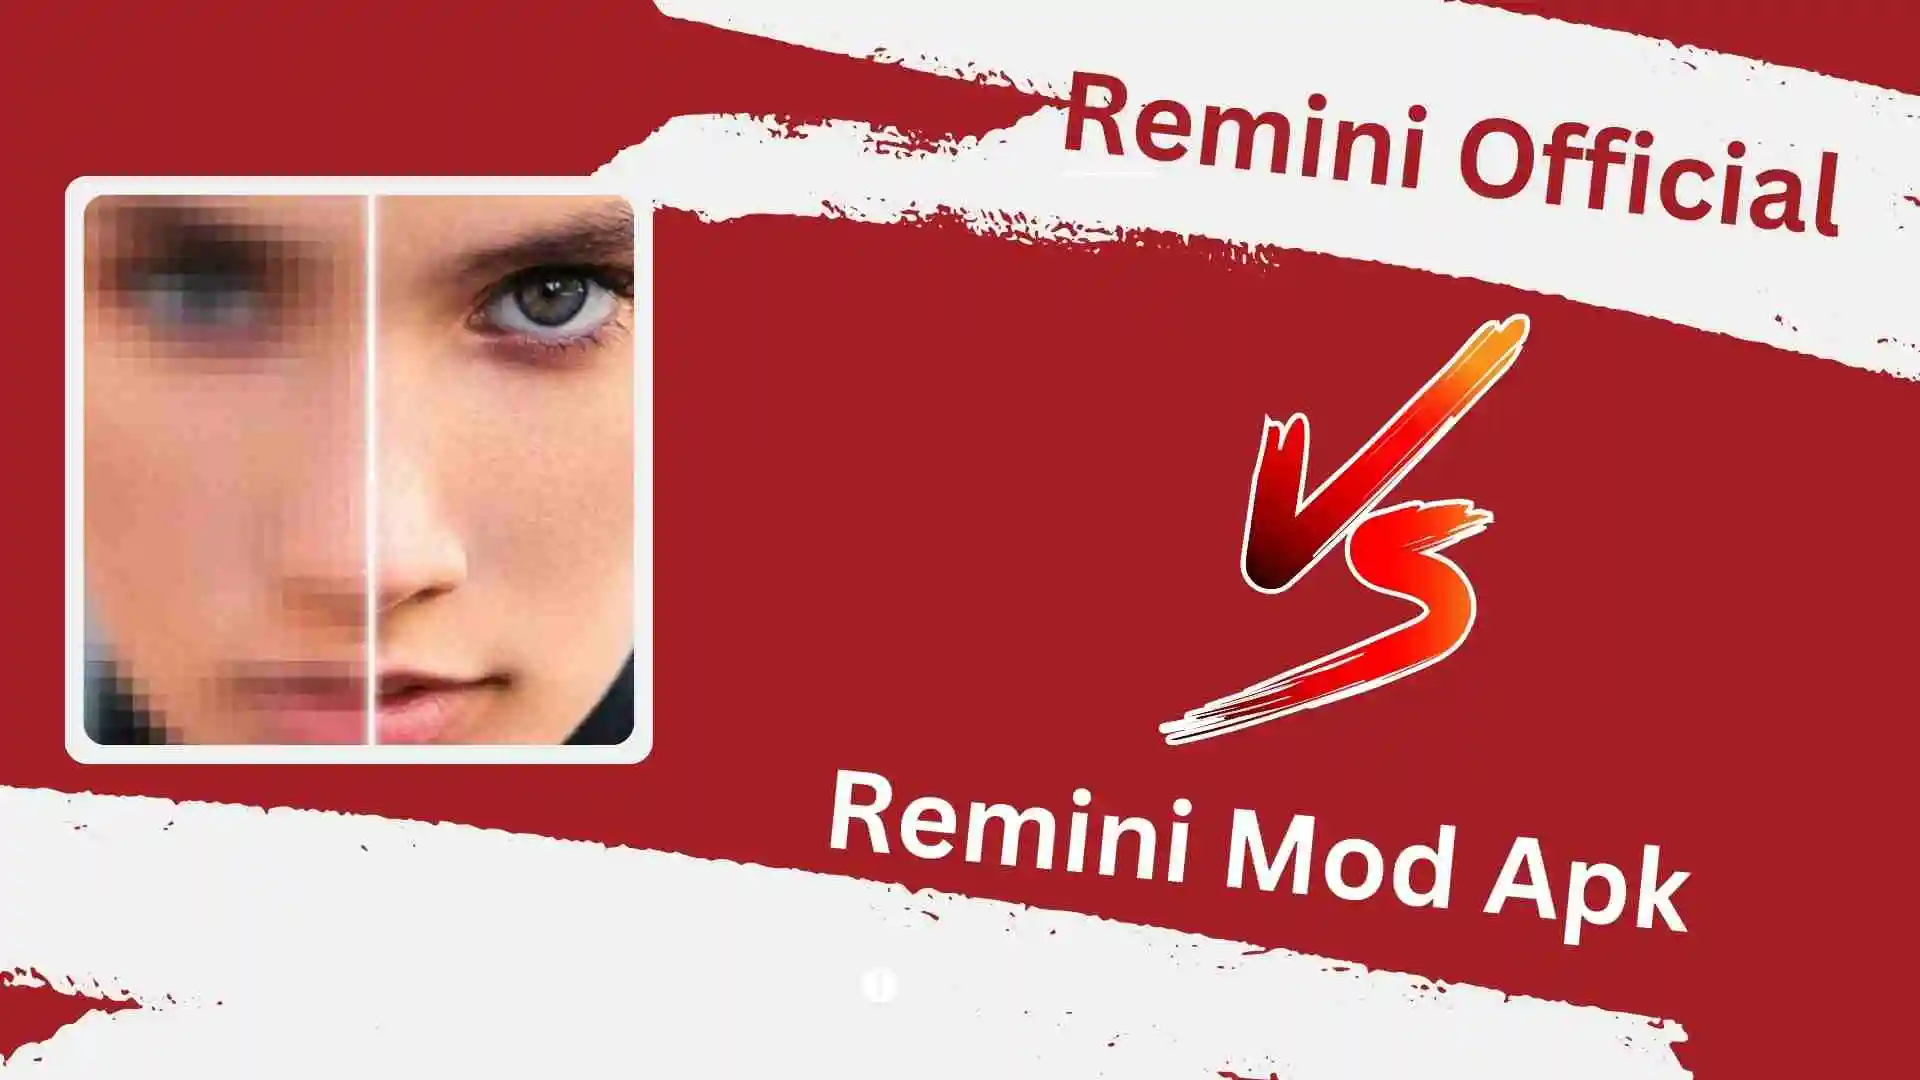 Remini Official vs Remini Mod Apk